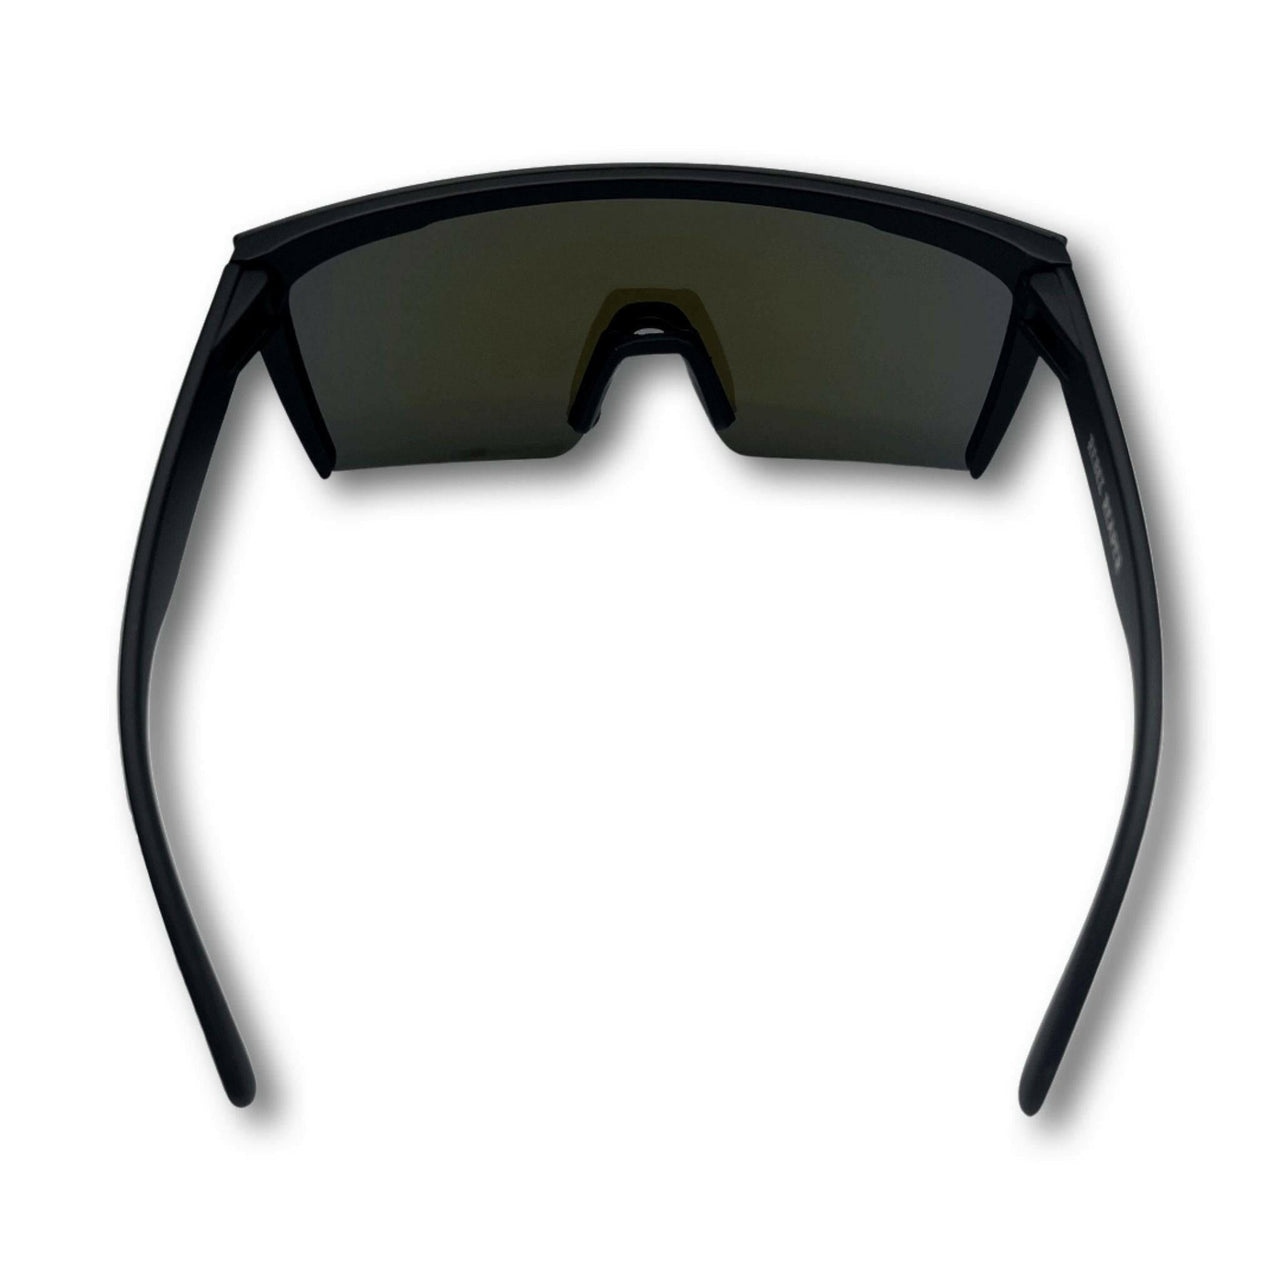 Hogans Purple Mirror Polarized Lens Sunglasses - Rebel Reaper Clothing Company Sunglasses